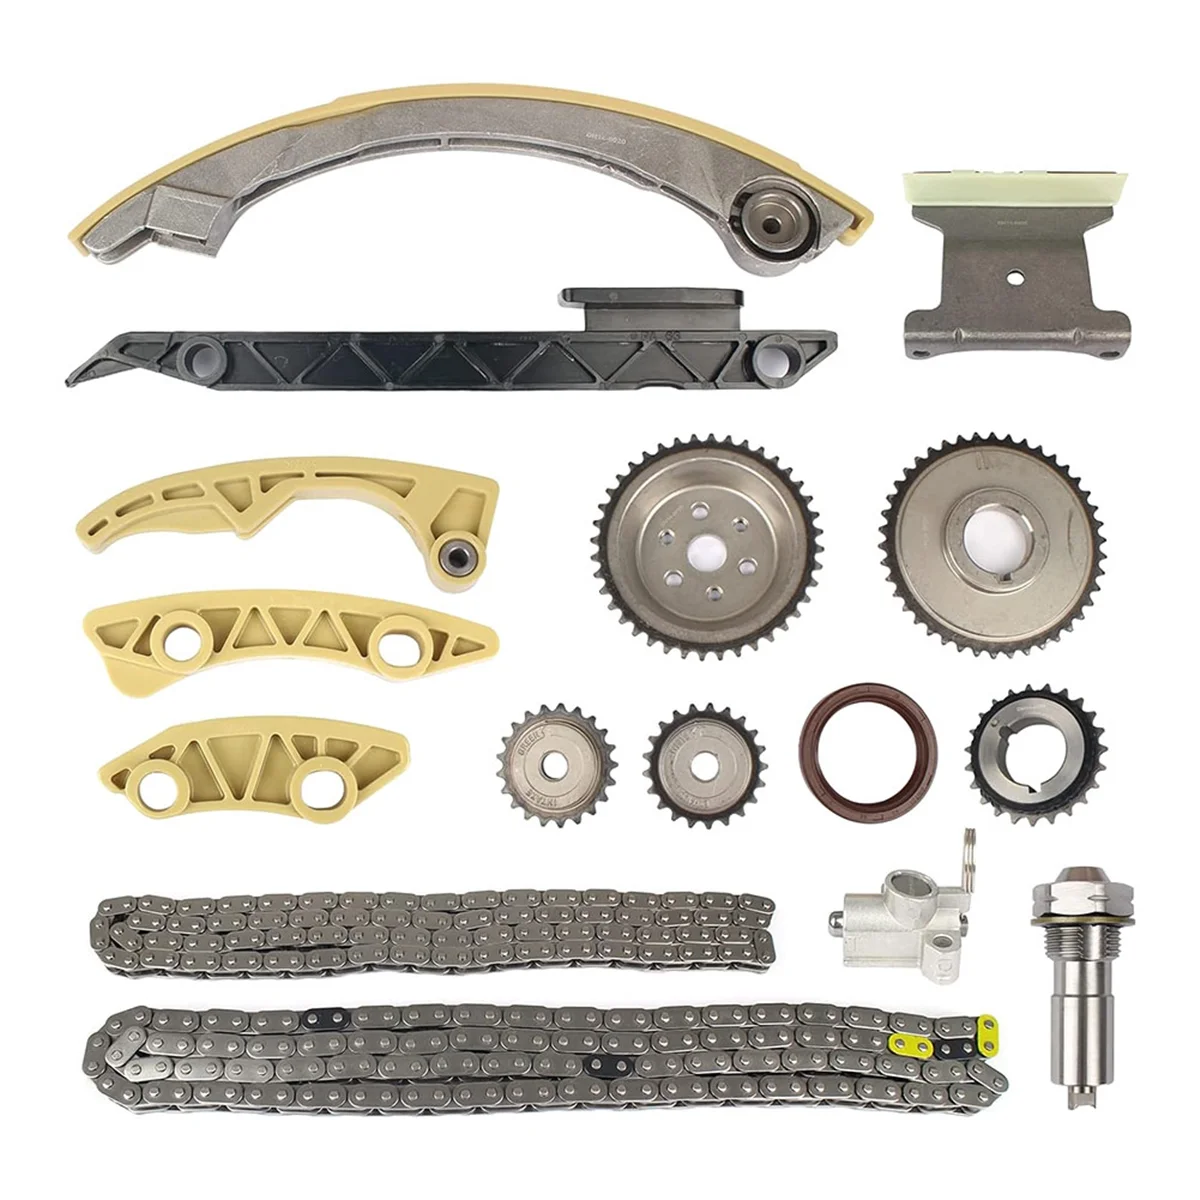 

9-4201S 9-4202S Timing Chain Shaft Kit for Chevrolet HHR Cobalt GMC Saturn Ion LS